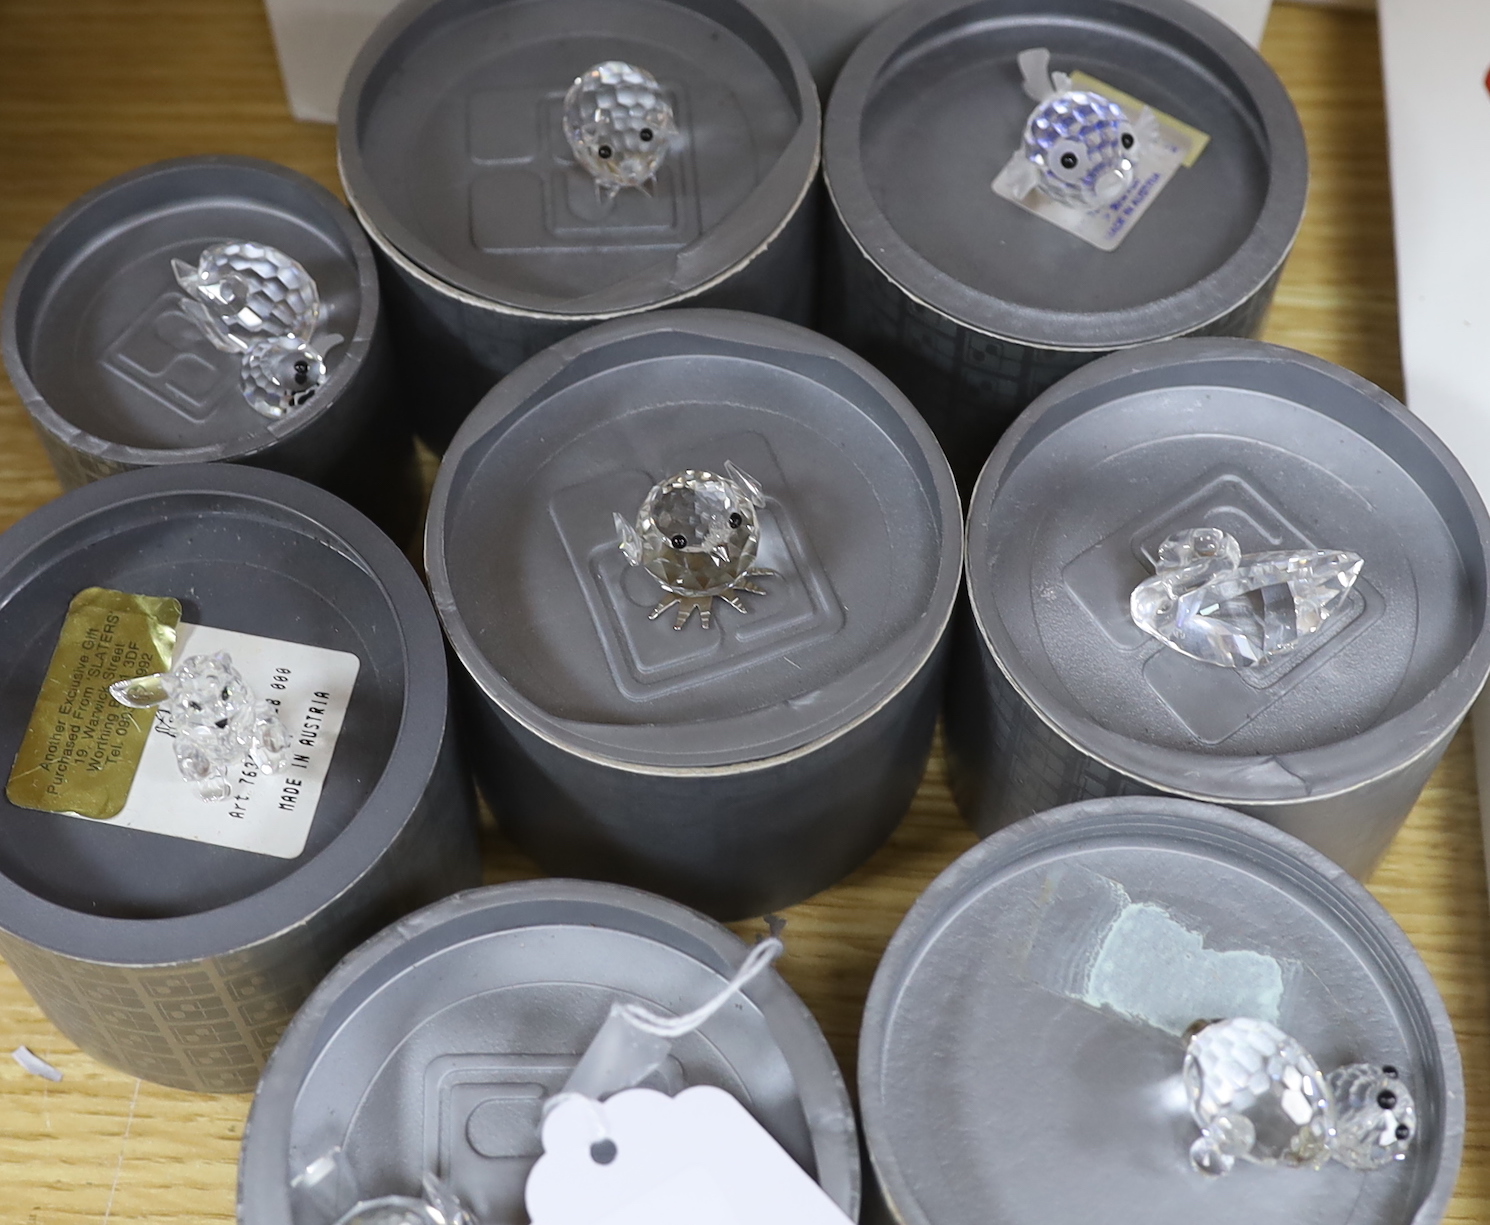 Thirteen Swarovski Crystal pieces, boxed